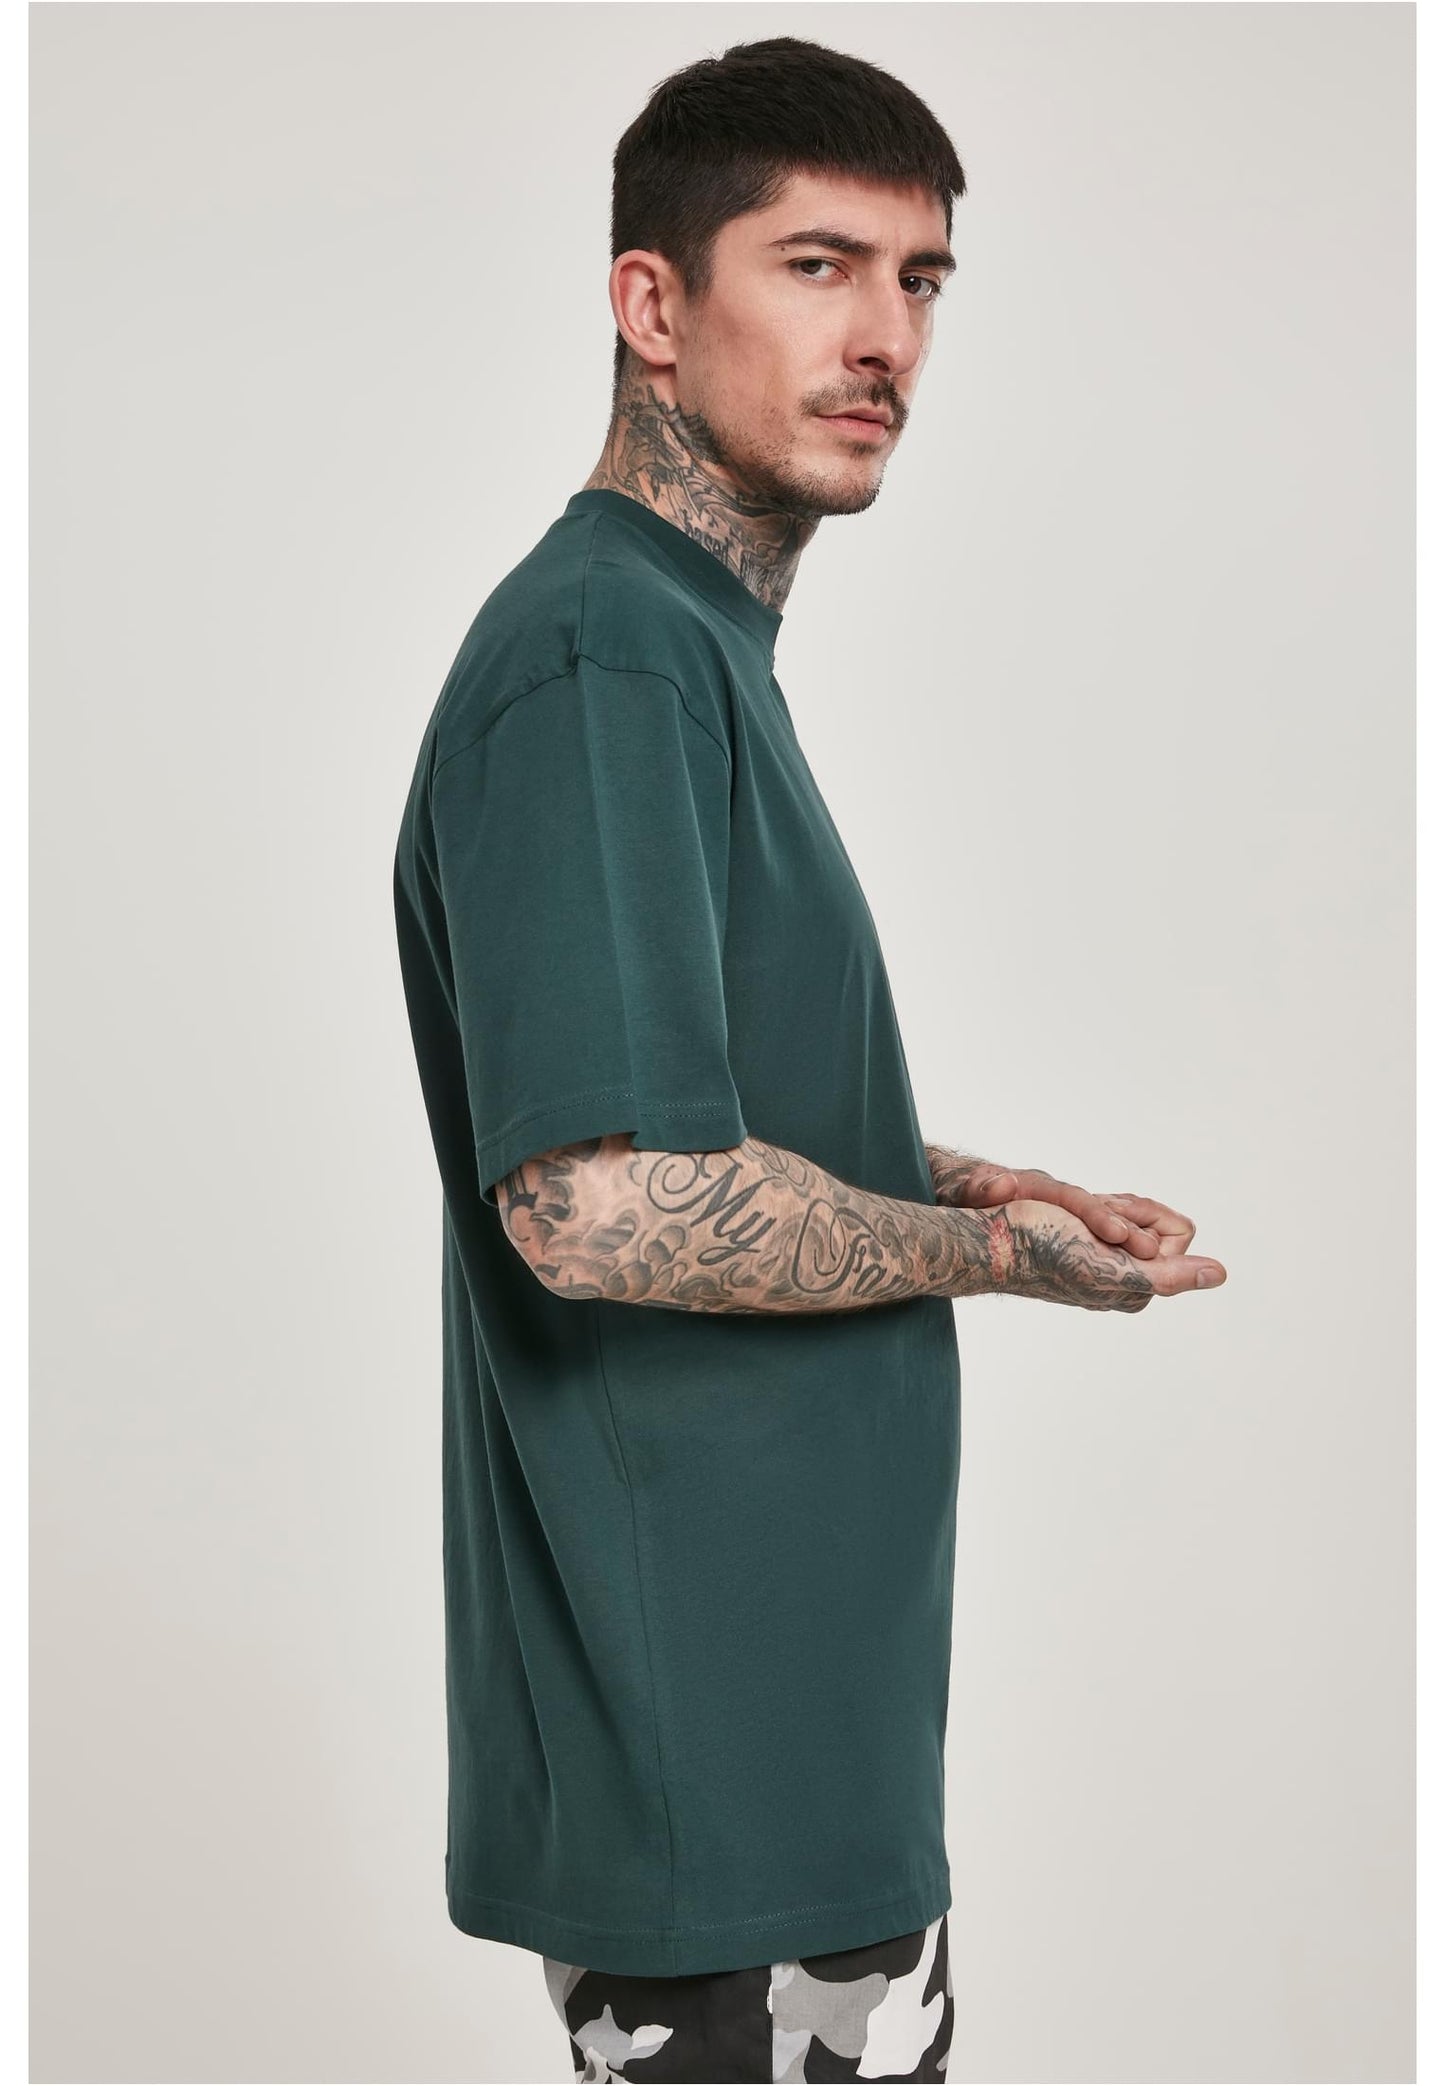 Urban Classics Tall T-Shirt Baggy / Loose Fit in Flaschengrün